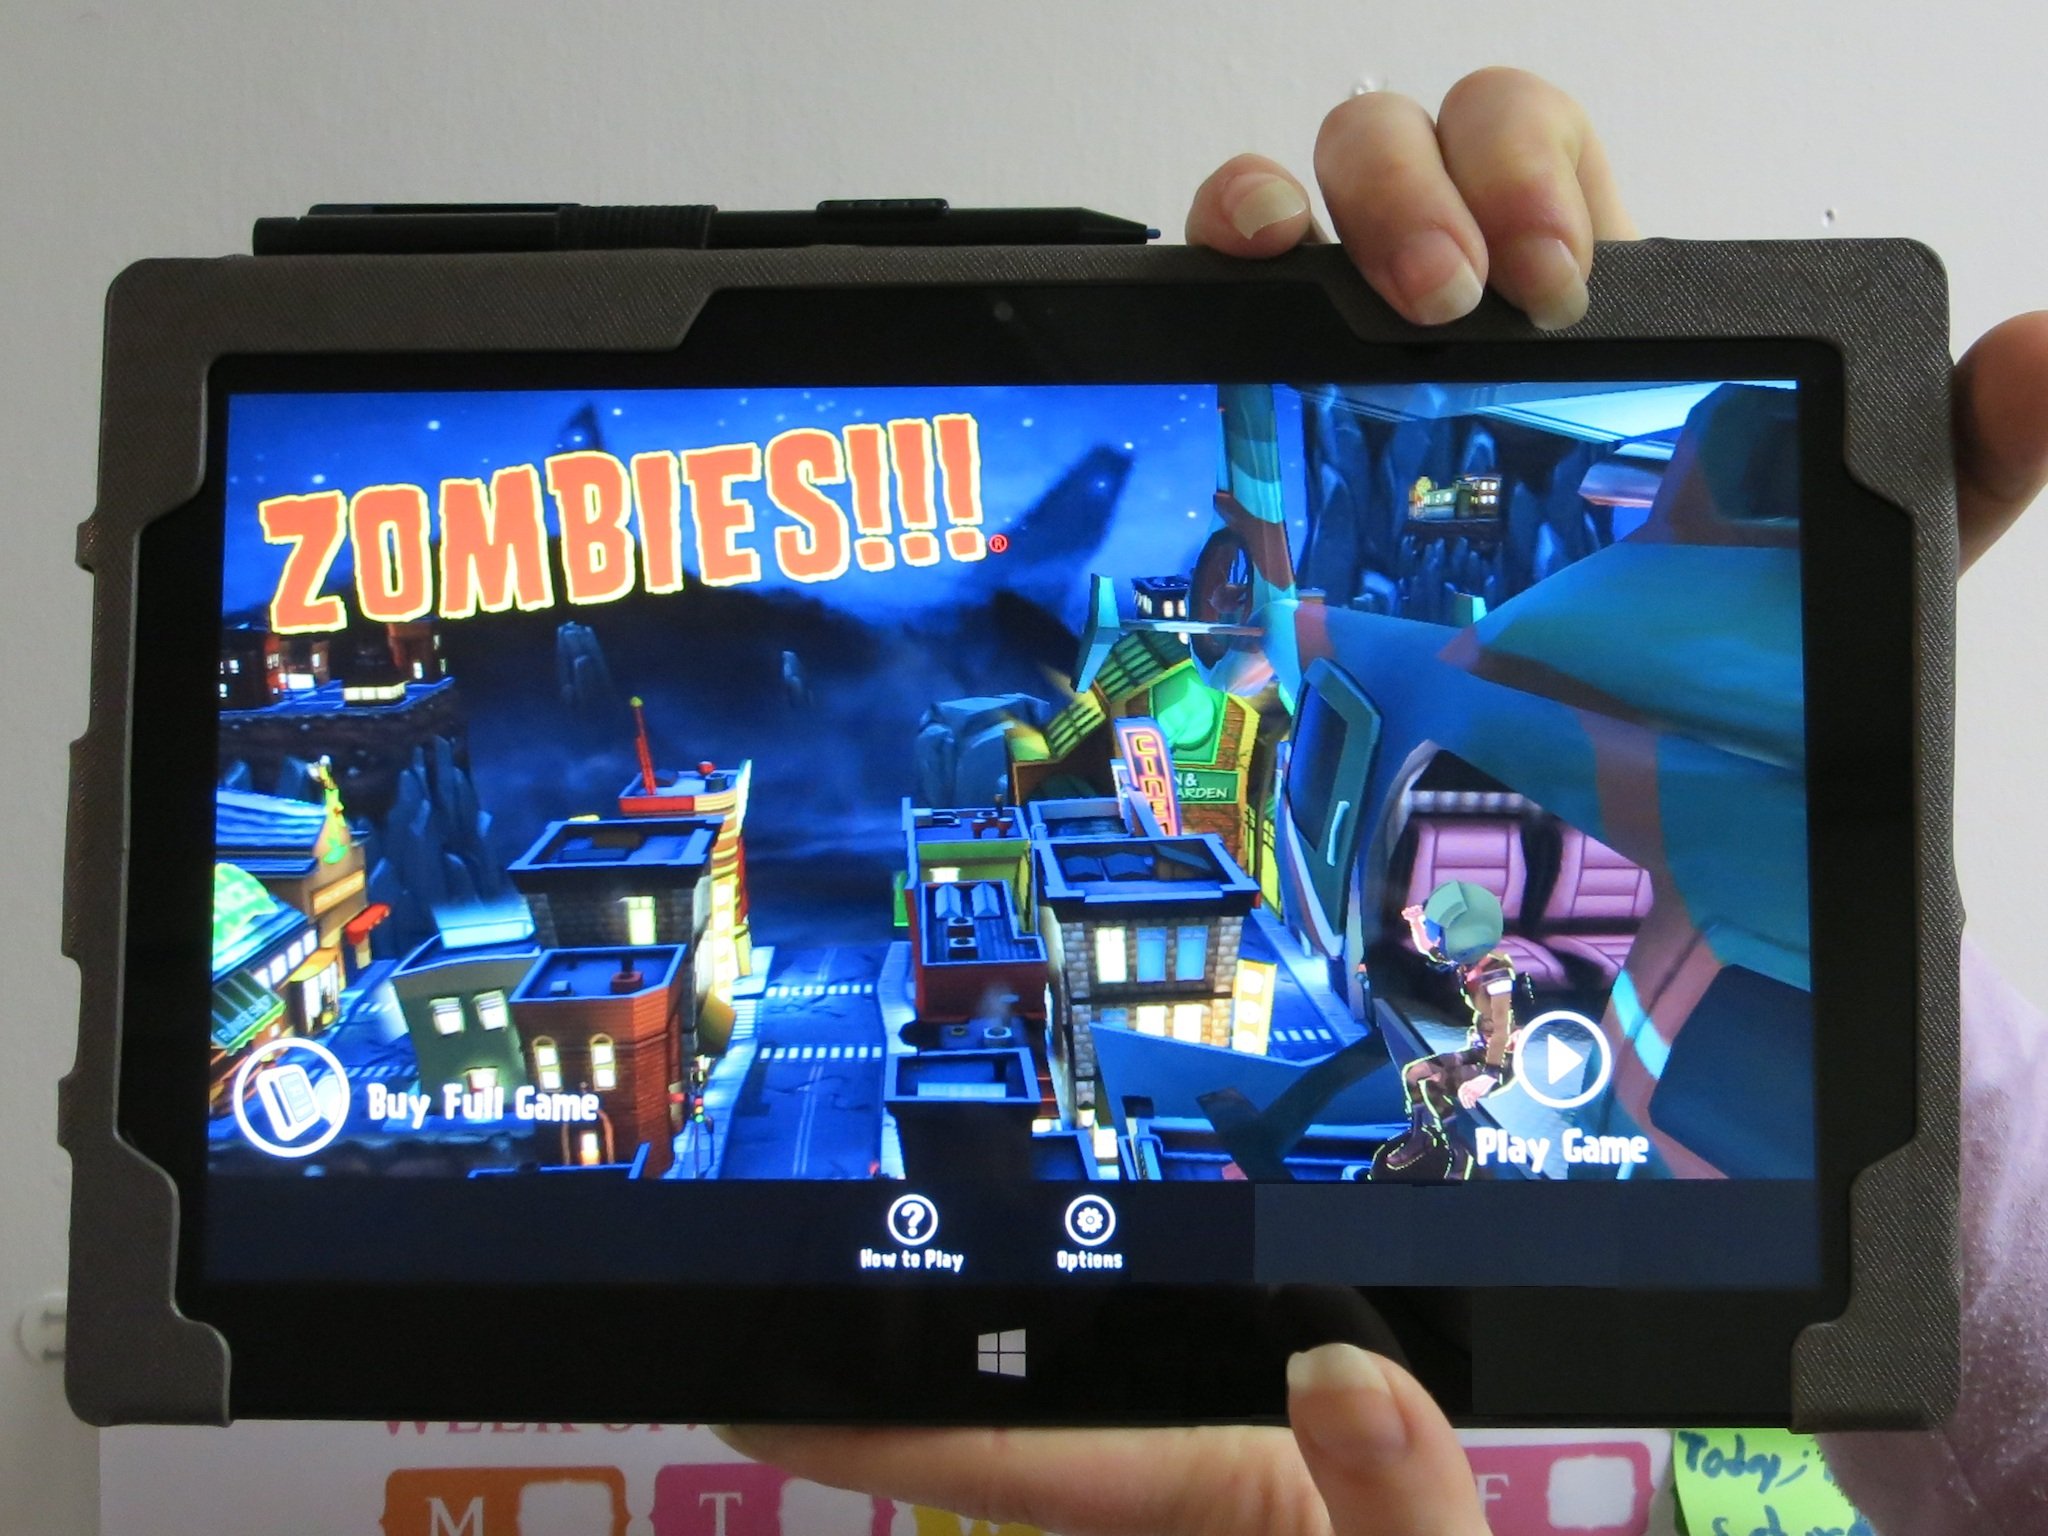 Zombies!!! Windows 8 Surface Pro